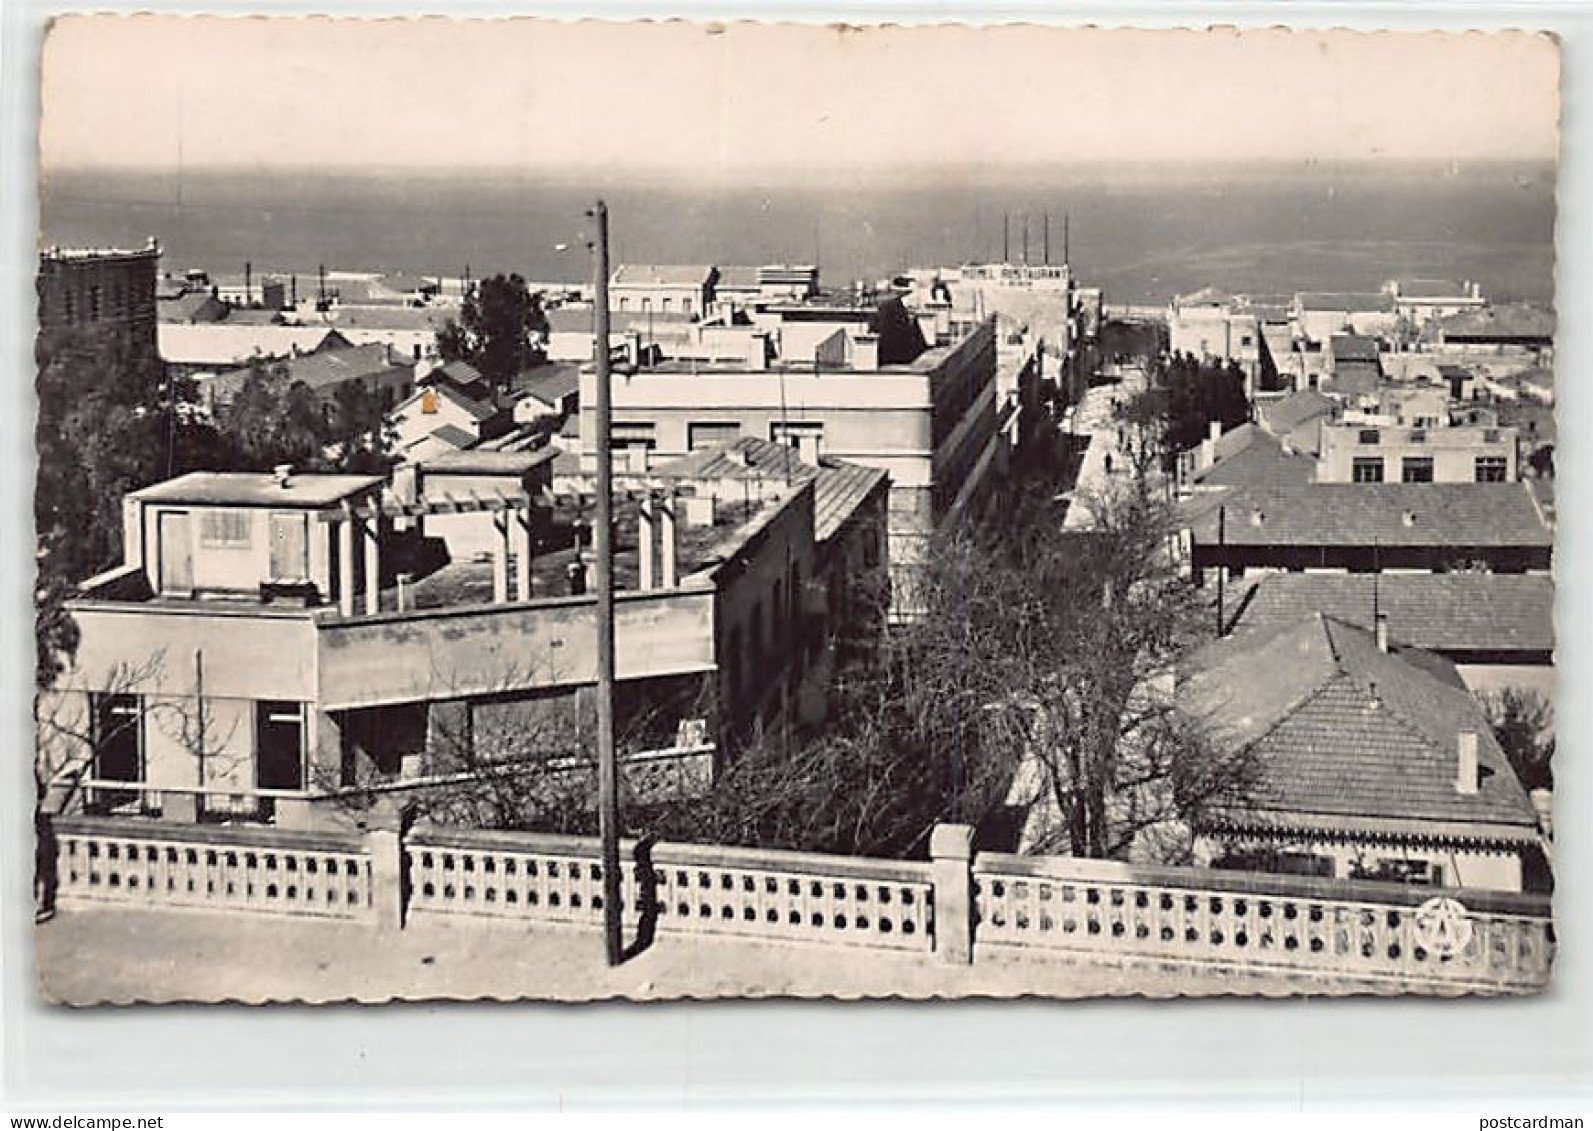 Algérie - MOSTAGADEM - Le Quartier De L'Avenue Raynal - Ed. A. Sirecky 21 - Mostaganem